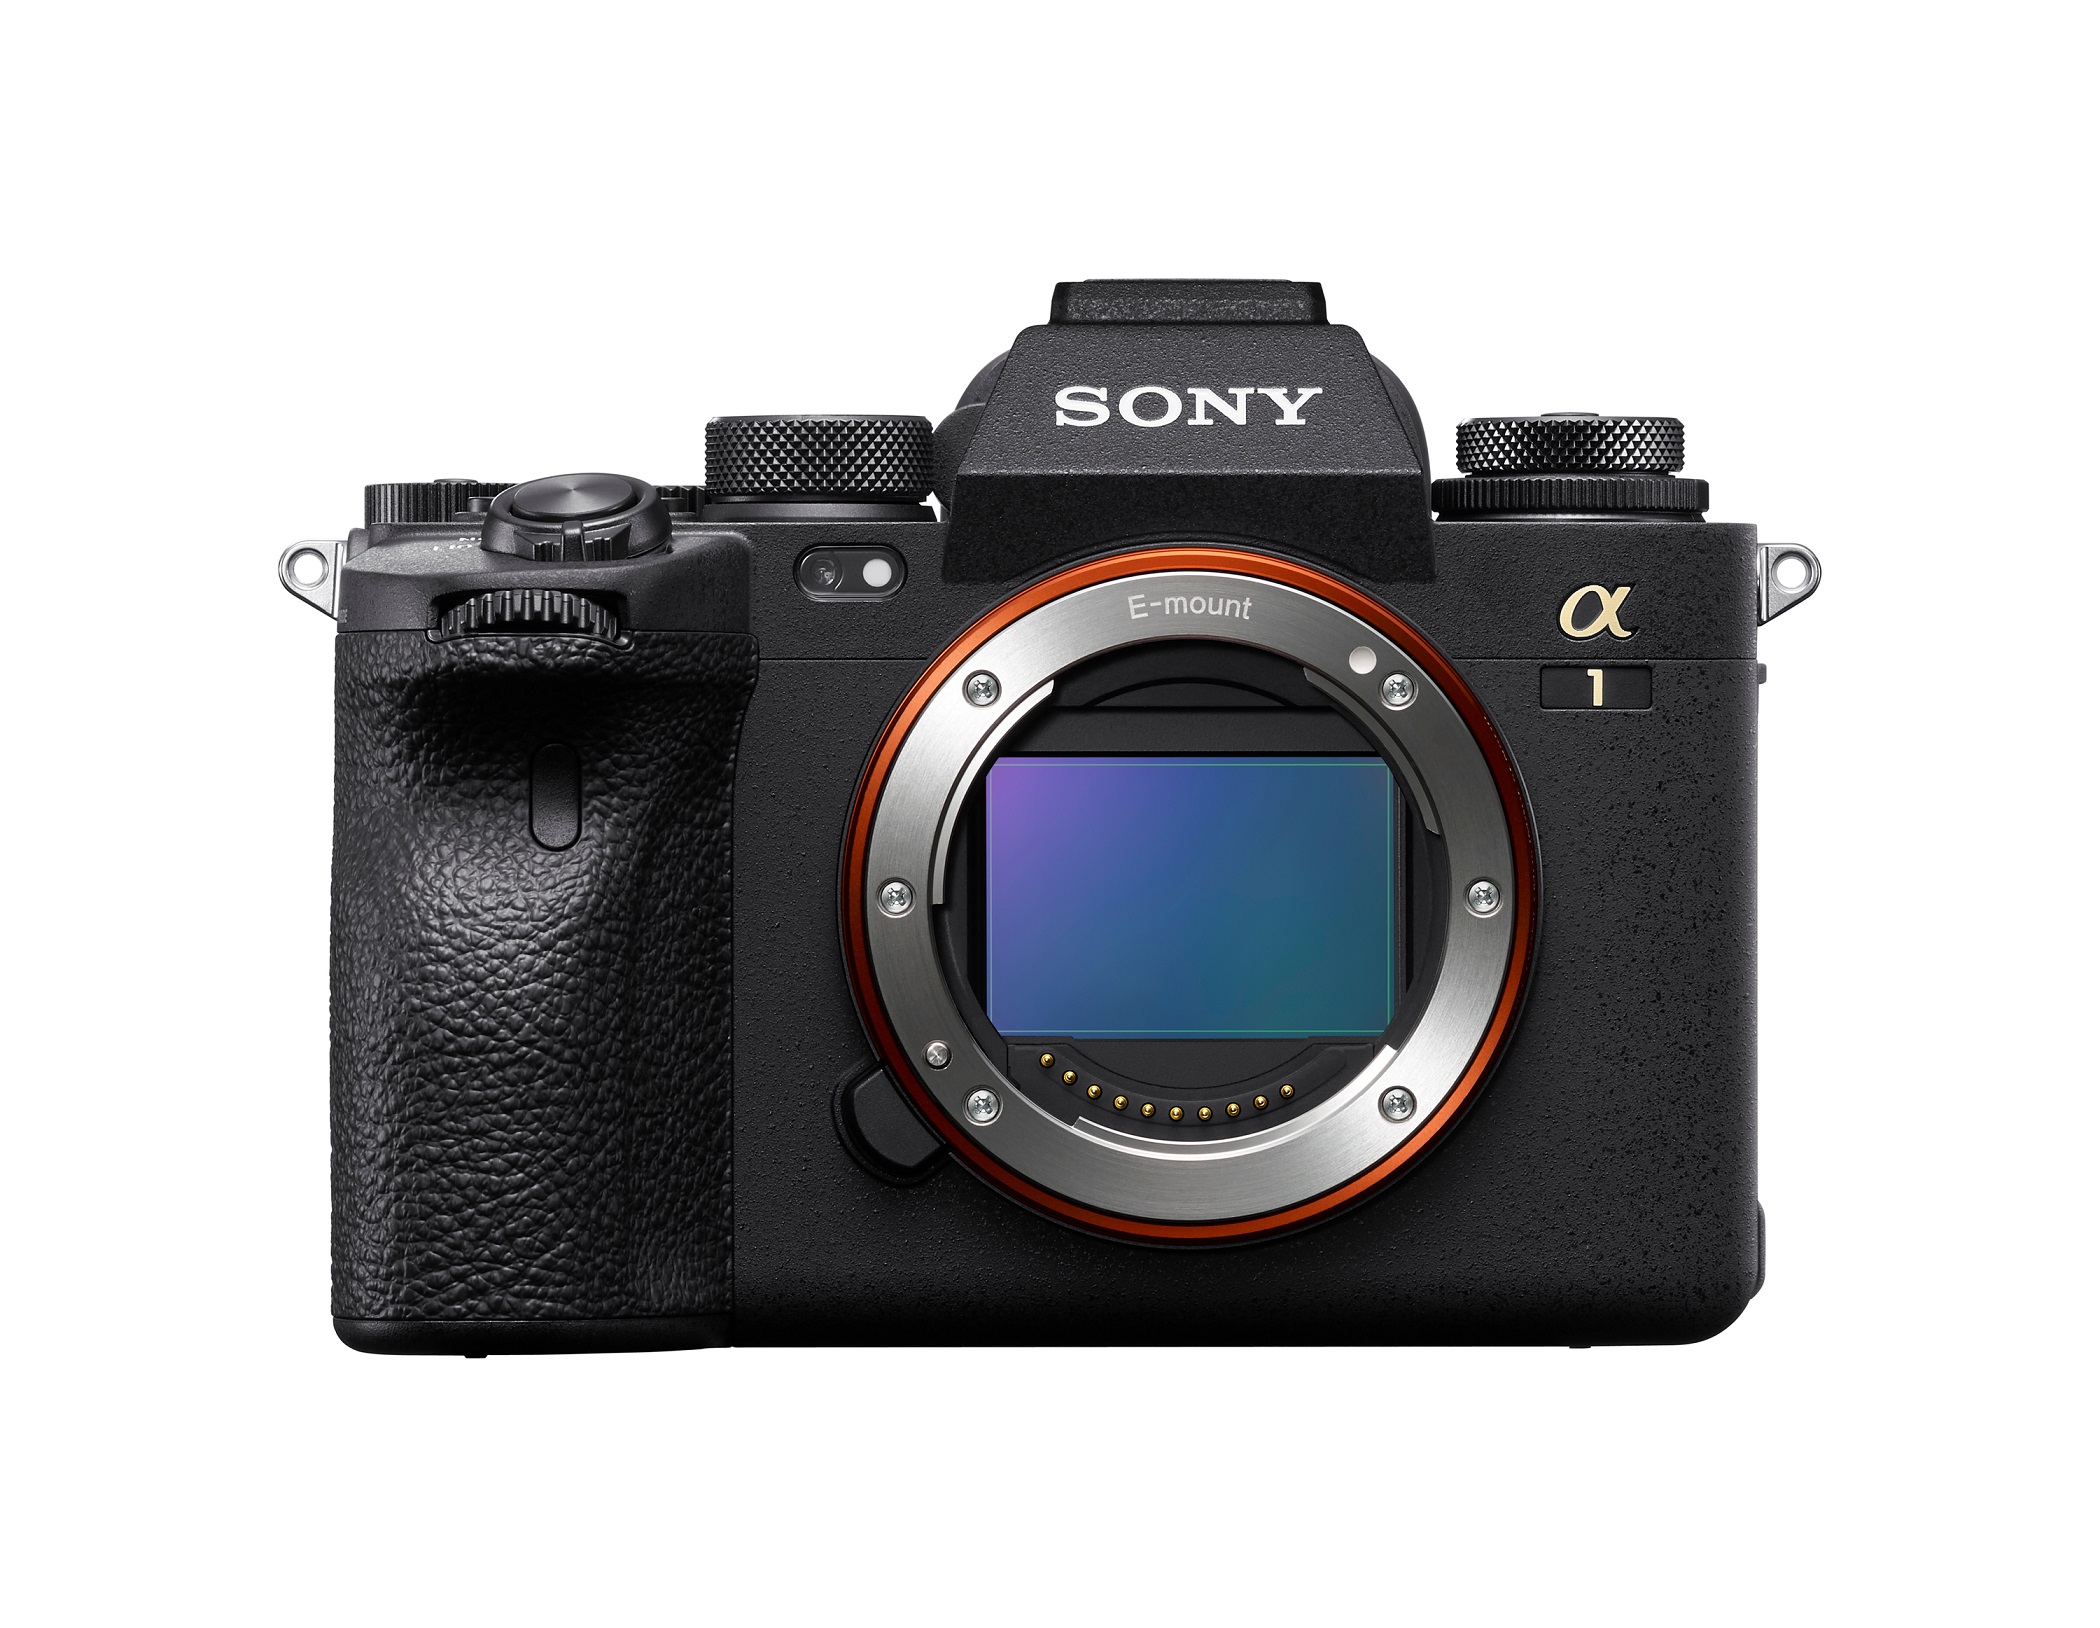 Sony Alpha A1 large format camera